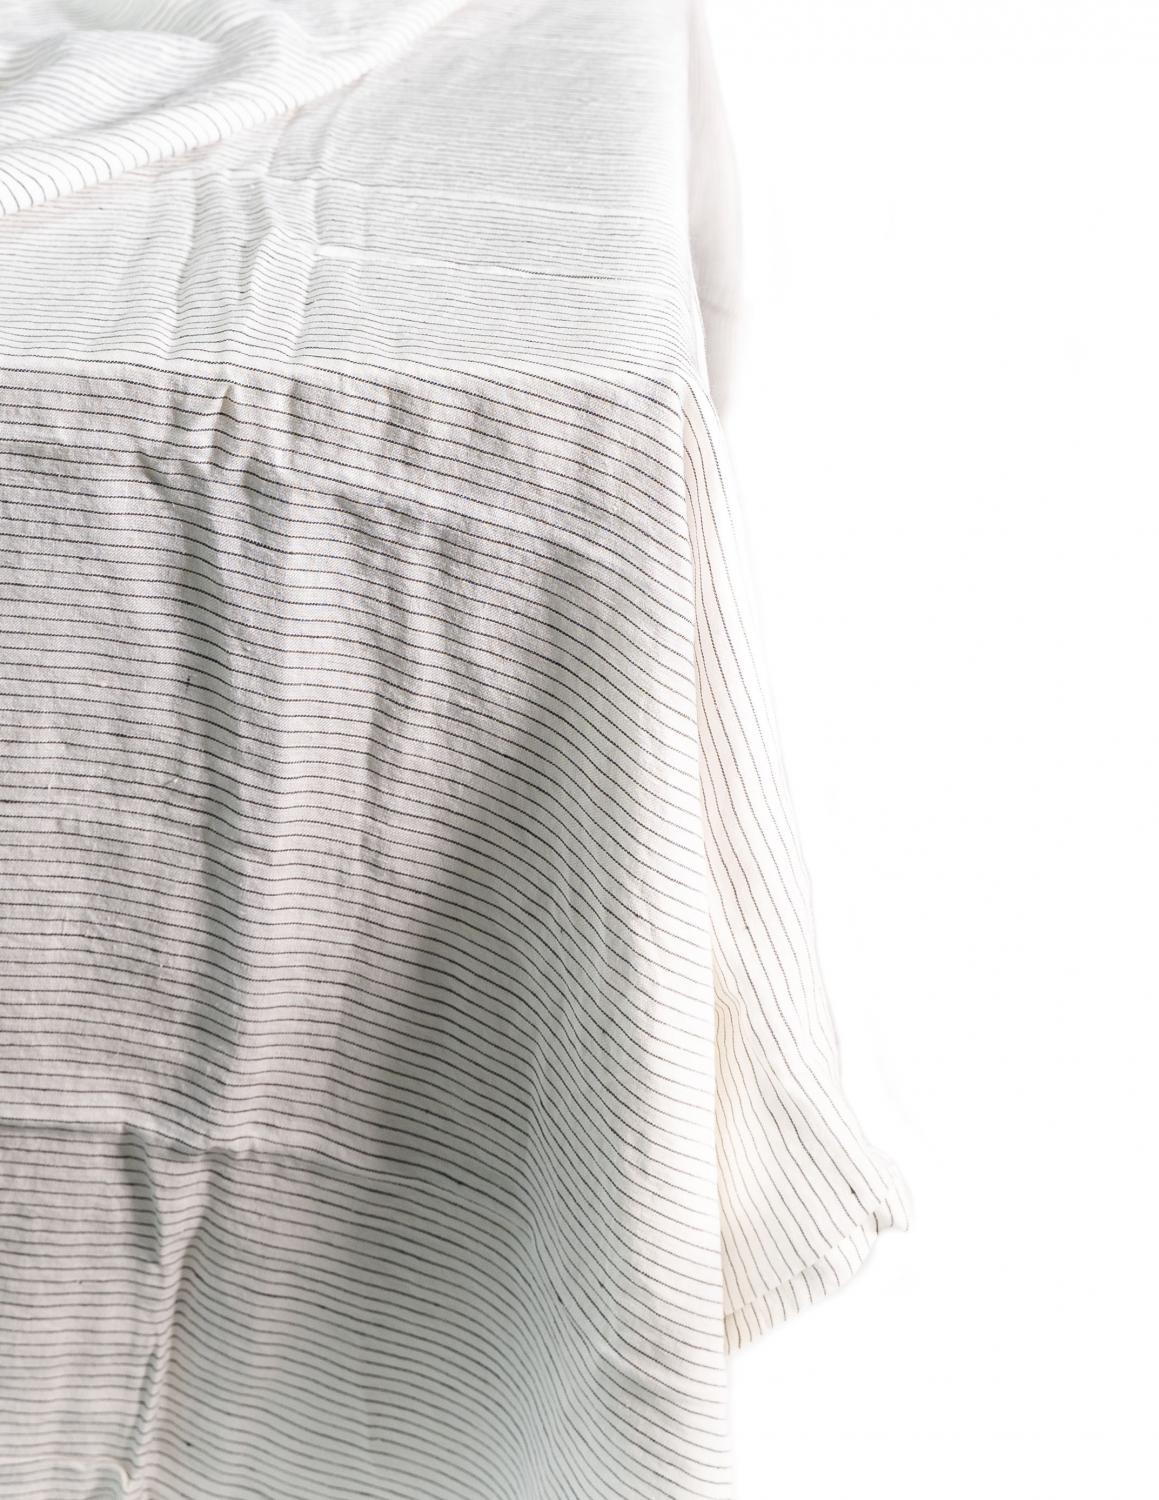 Tablecloth Pinstripe White/Grey